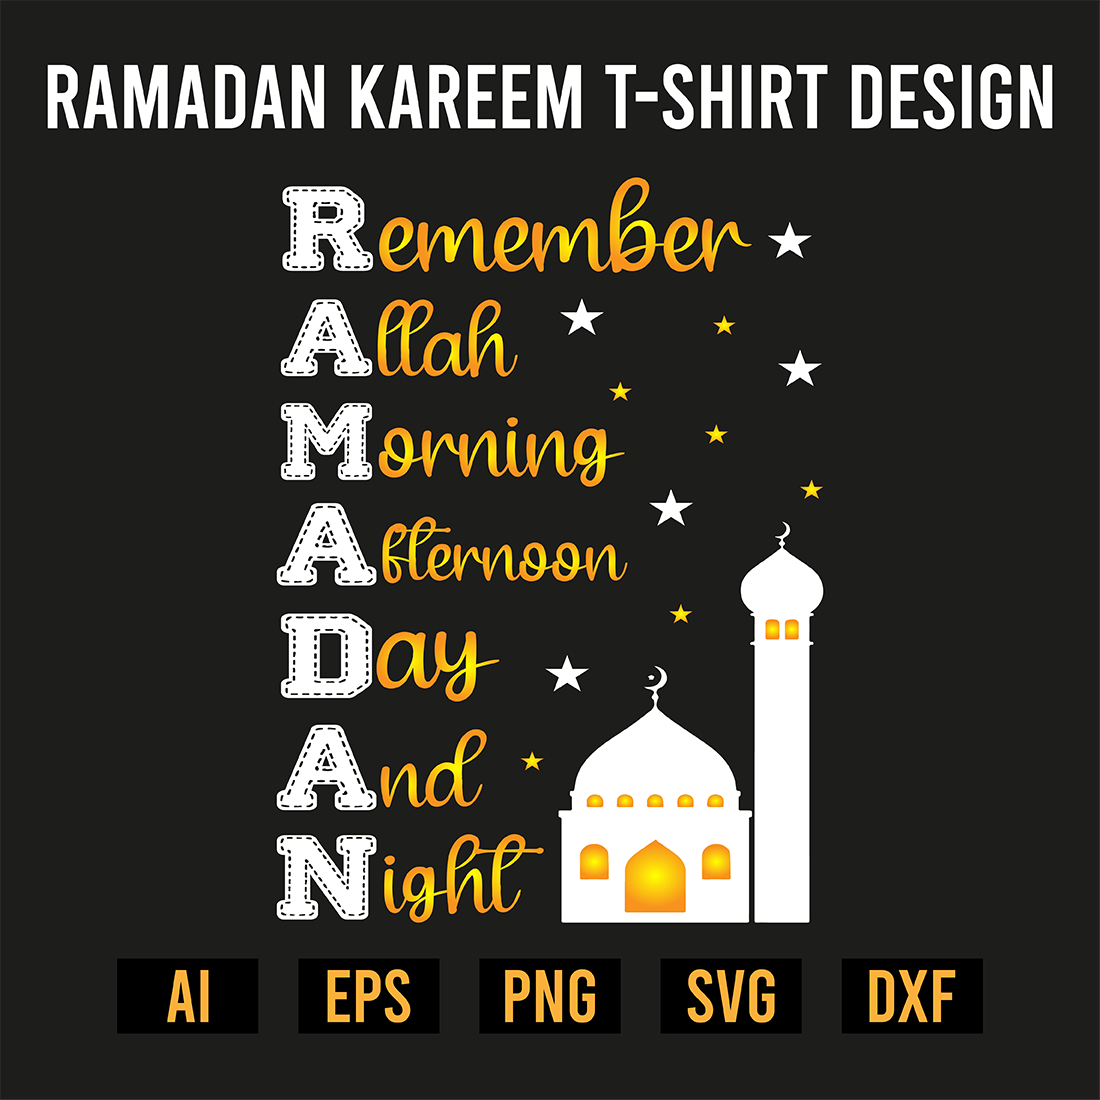 Ramadan Kareem T-Shirt Design preview image.